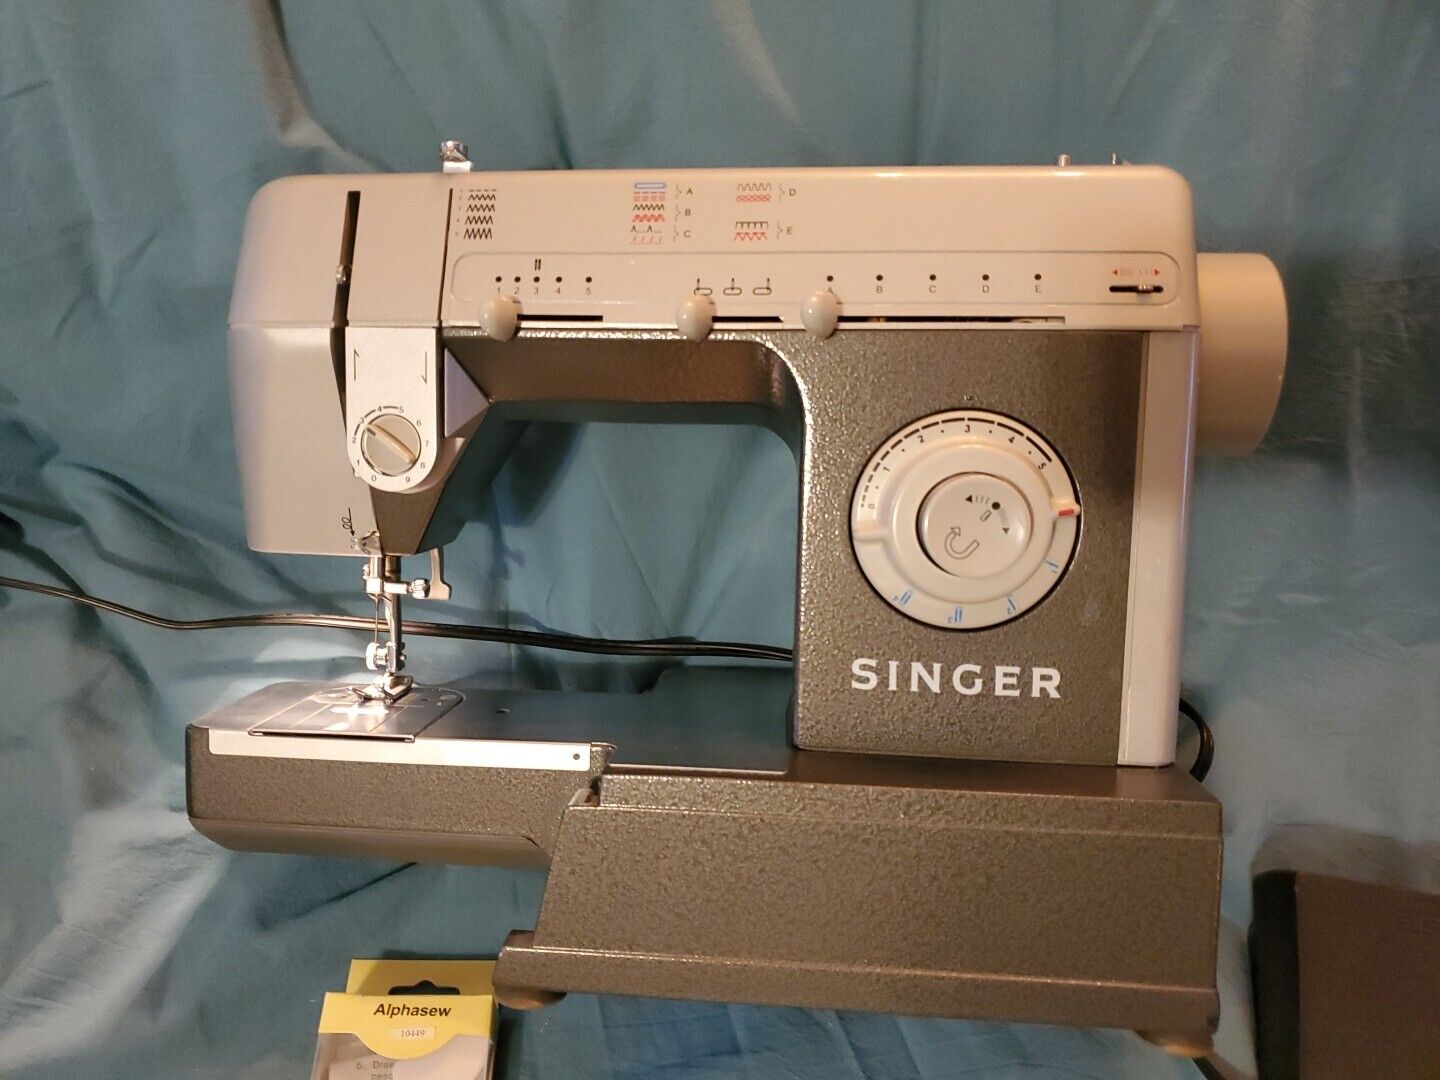 SINGER PROFESSIONAL SEWING MACHINE CG-550C  WORKS but needs new bobbin case